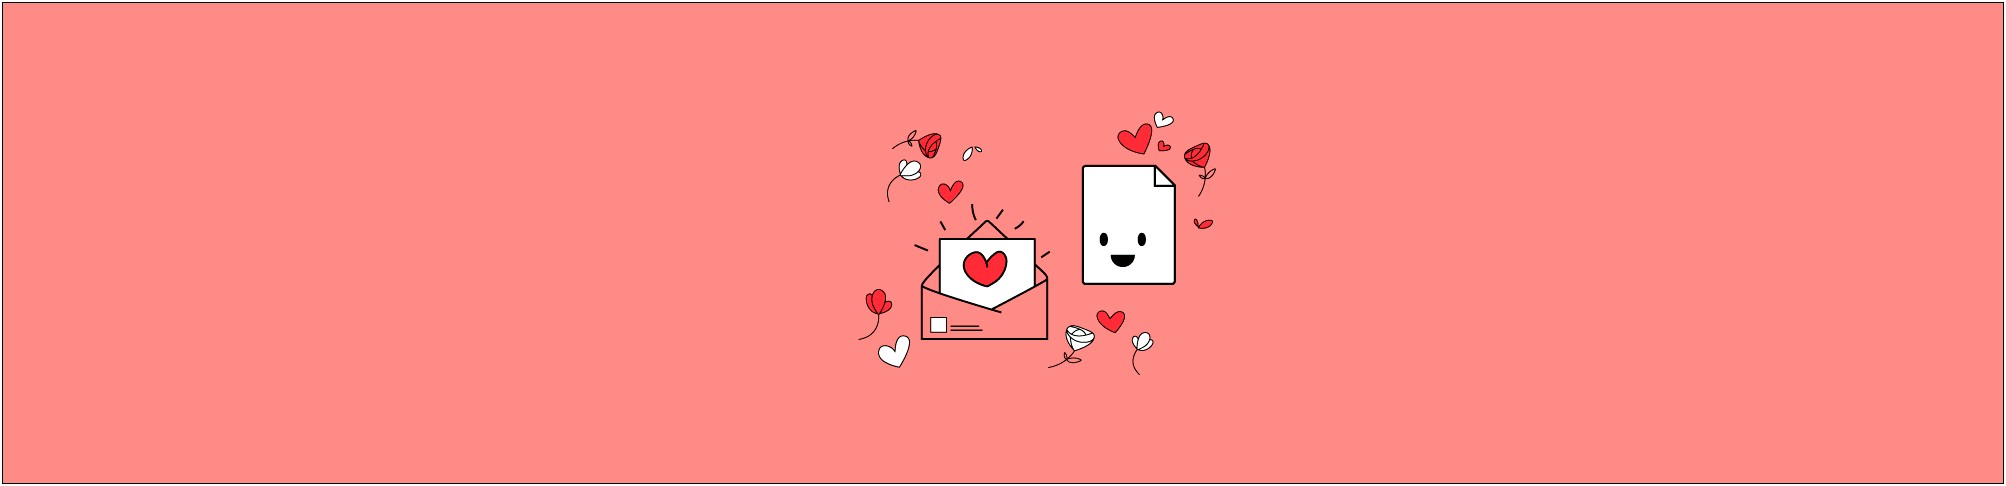 Microsoft Word Valentine's Day Template